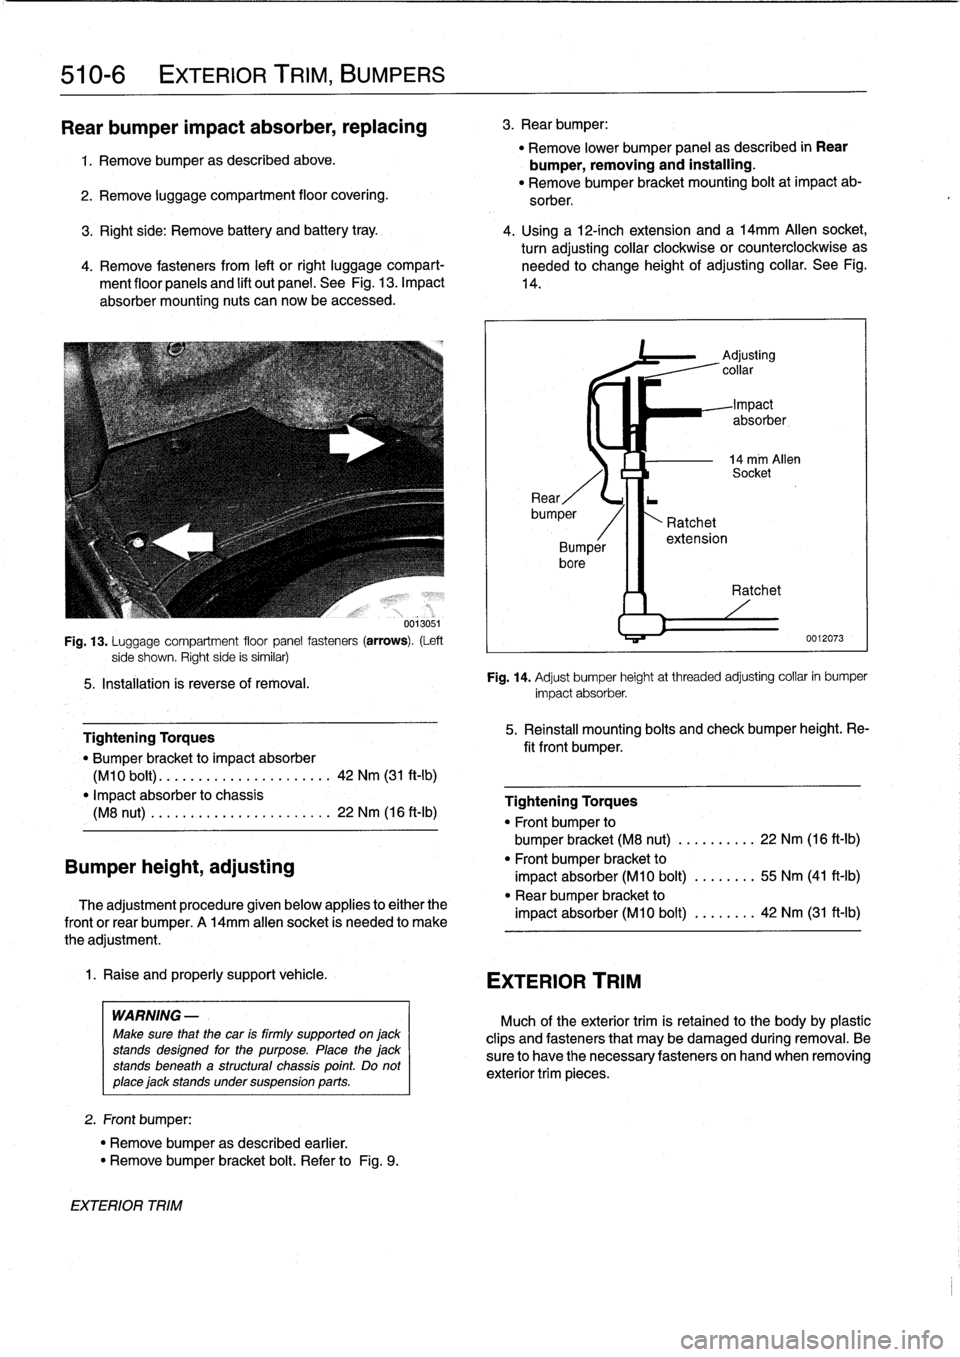 BMW 318i 1997 E36 Workshop Manual 
510-
6

	

EXTERIOR
TRIM,
BUMPERS

Rear
bumper
impact
absorber,replacing

1
.
Remove
bumperas
described
above
.

2
.
Remove
luggage
compartment
floor
covering
.

Fig
.
13
.
Luggage
compartment
floor
